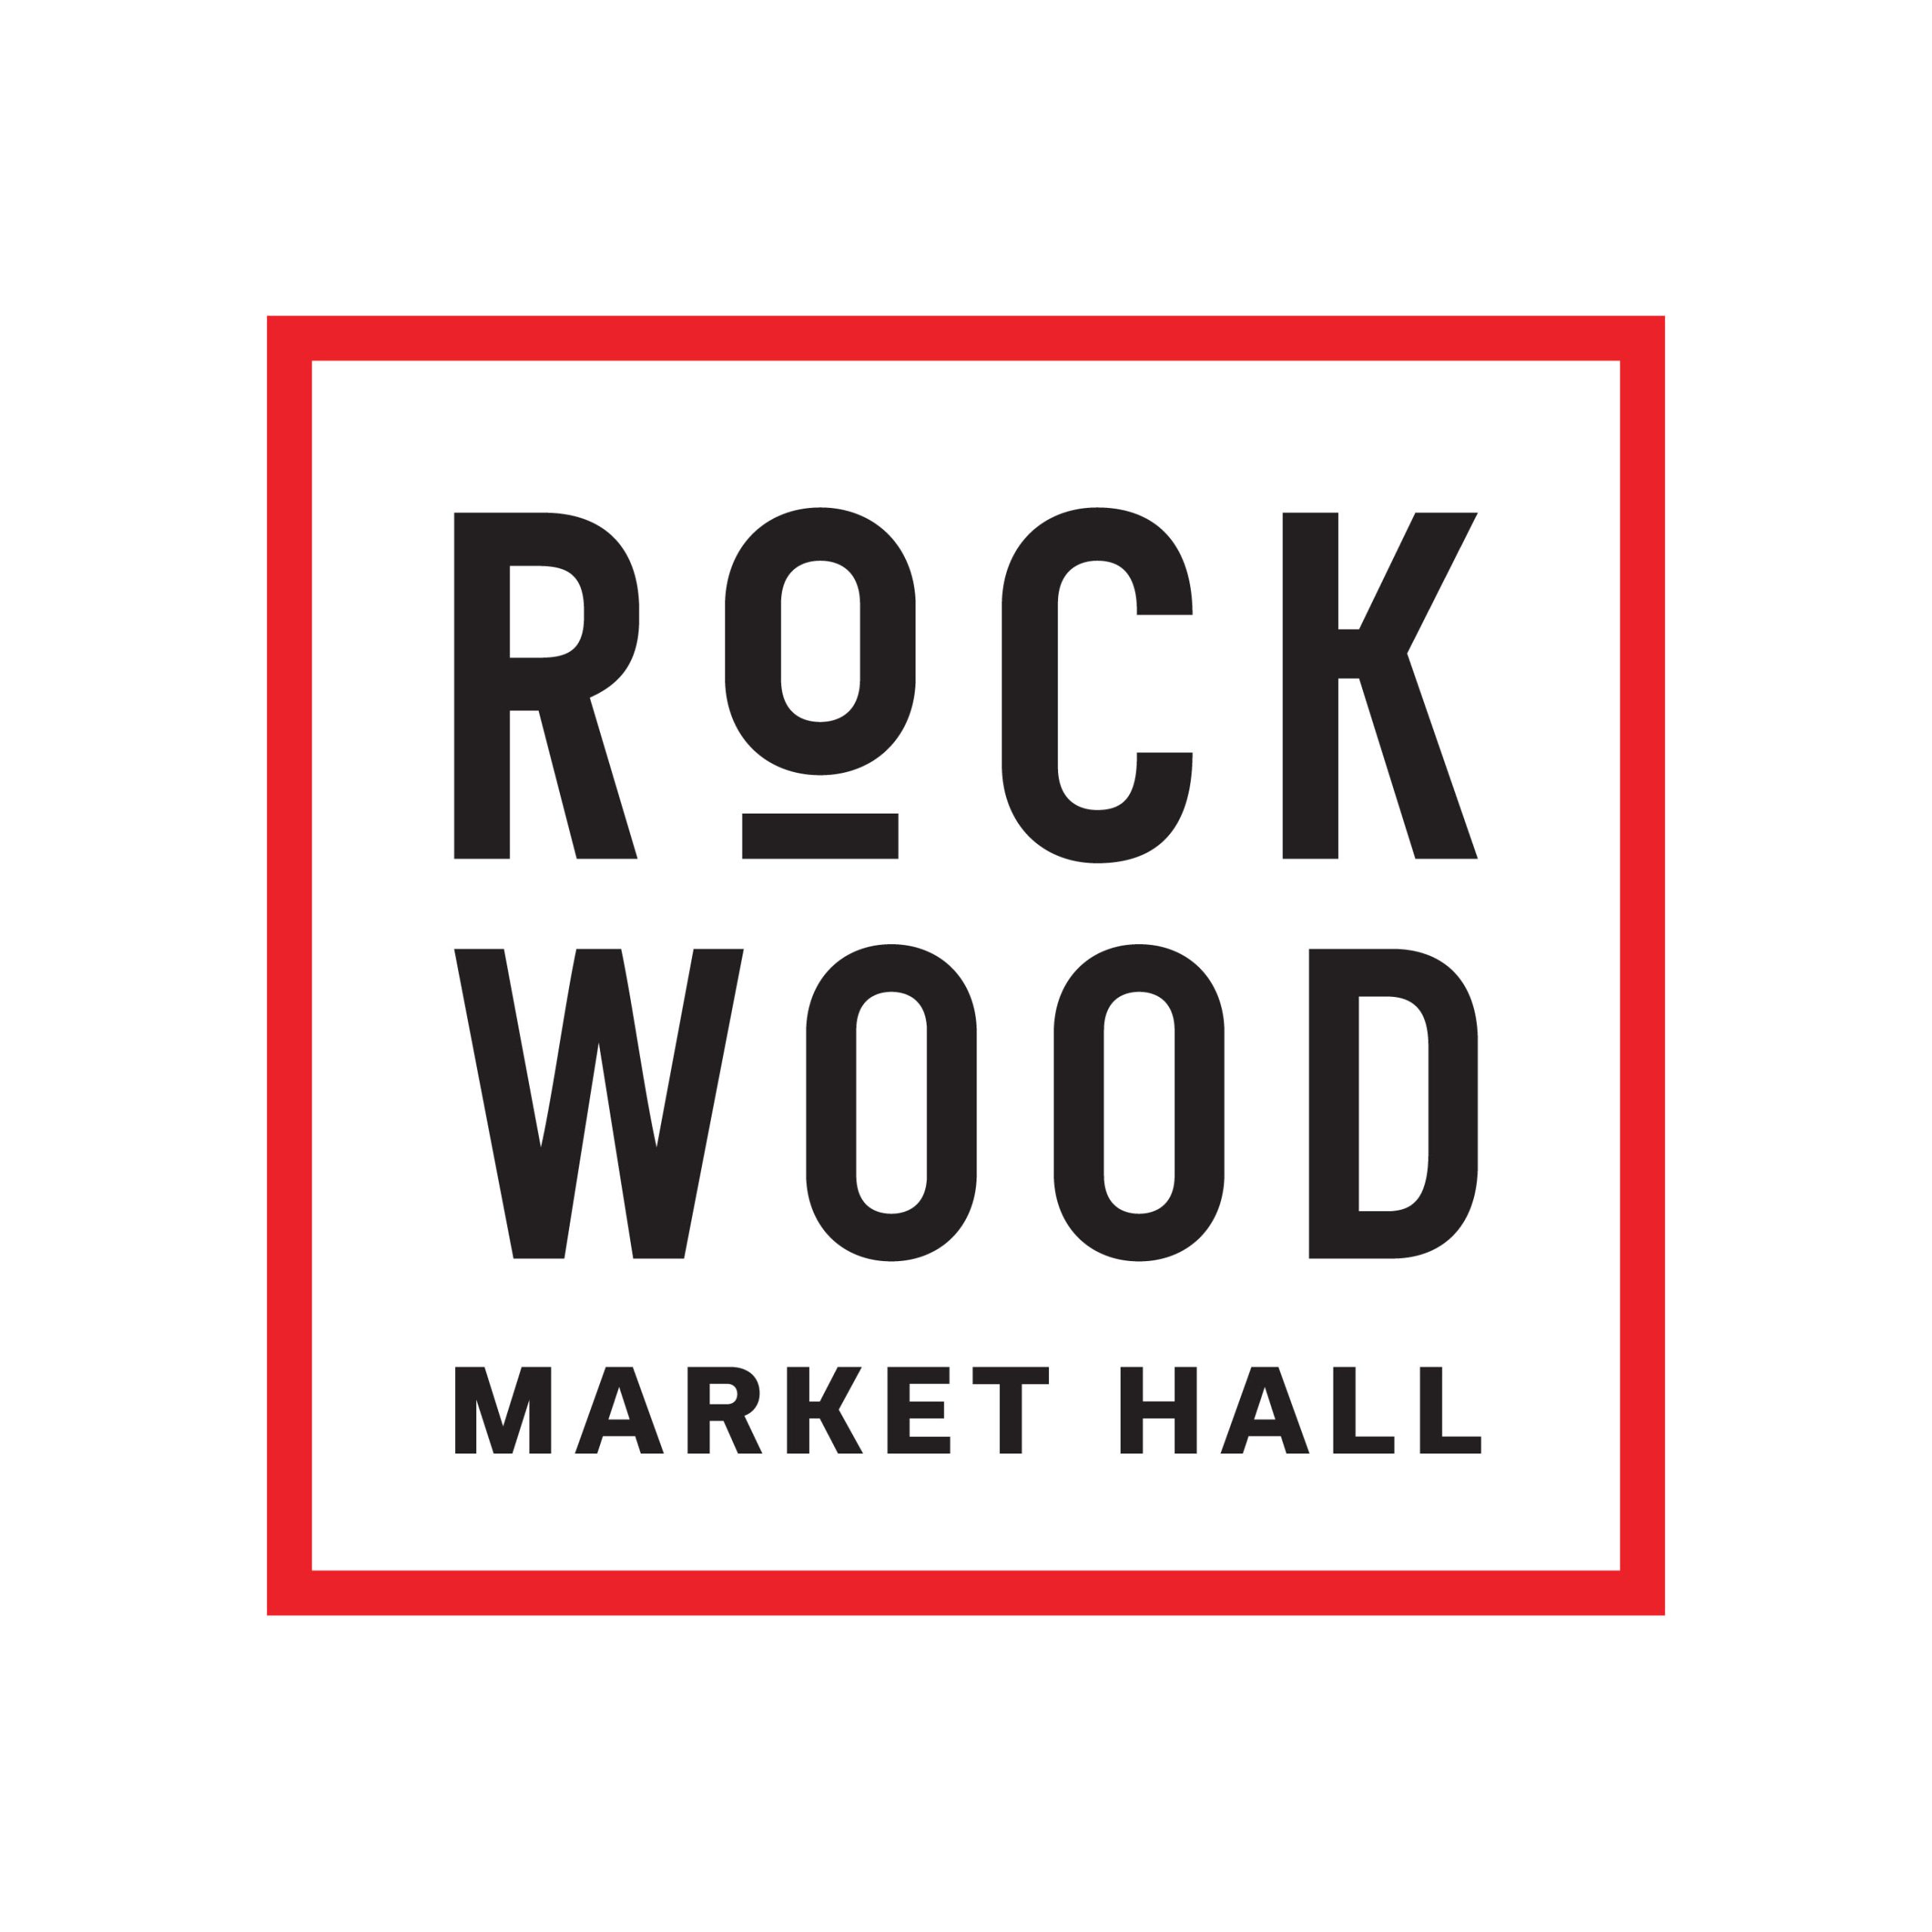 Rockwood Market Hall